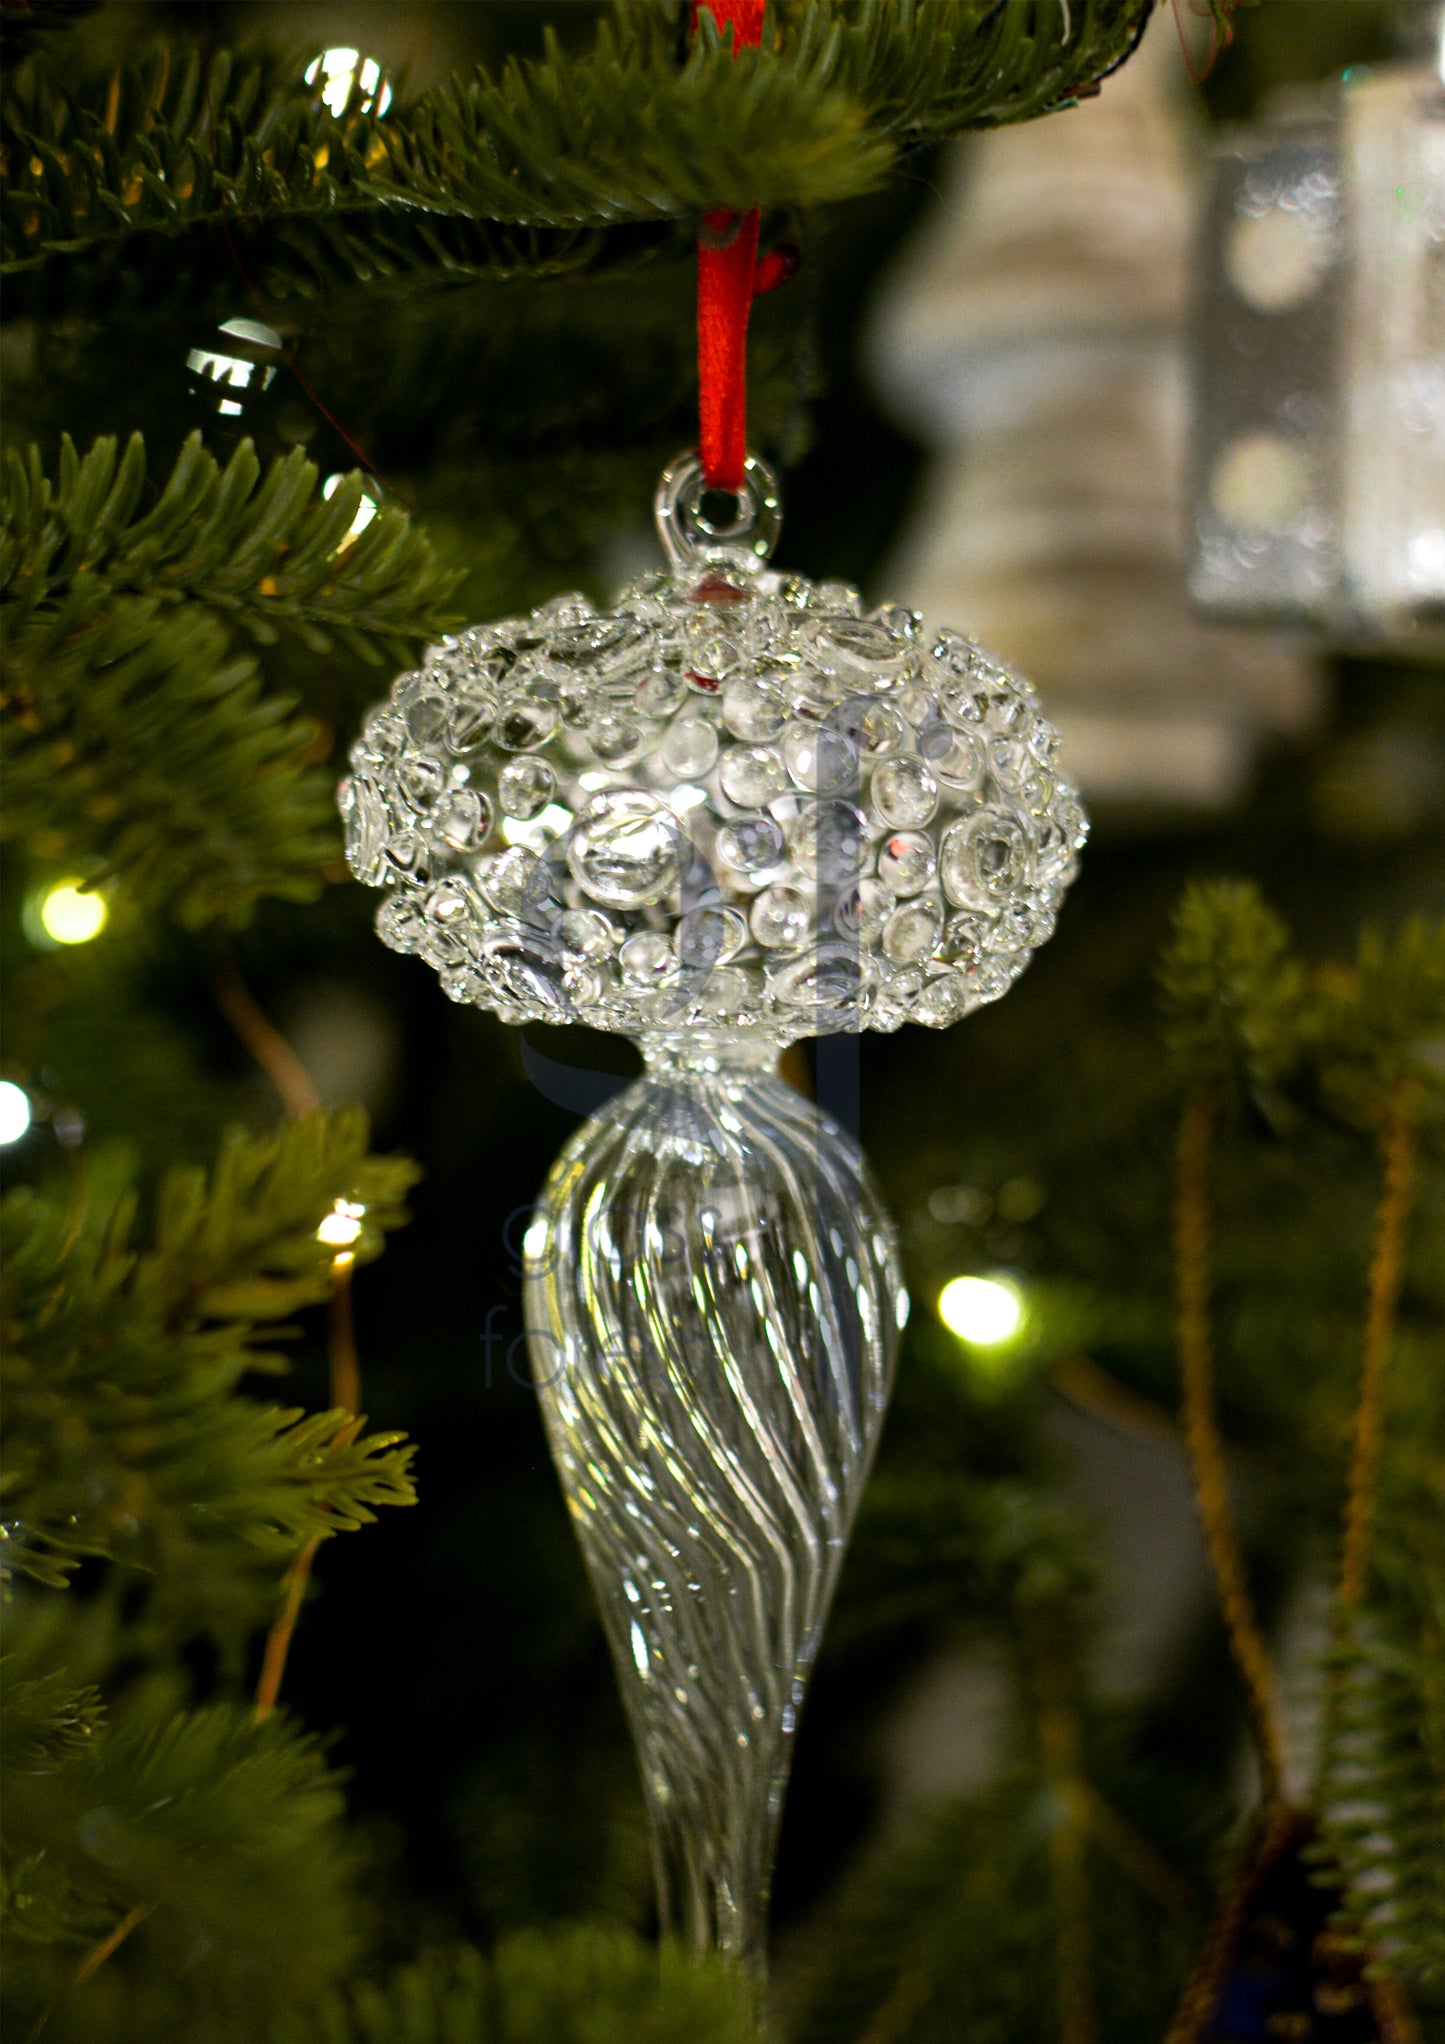 Christmas ornaments - Bubbles